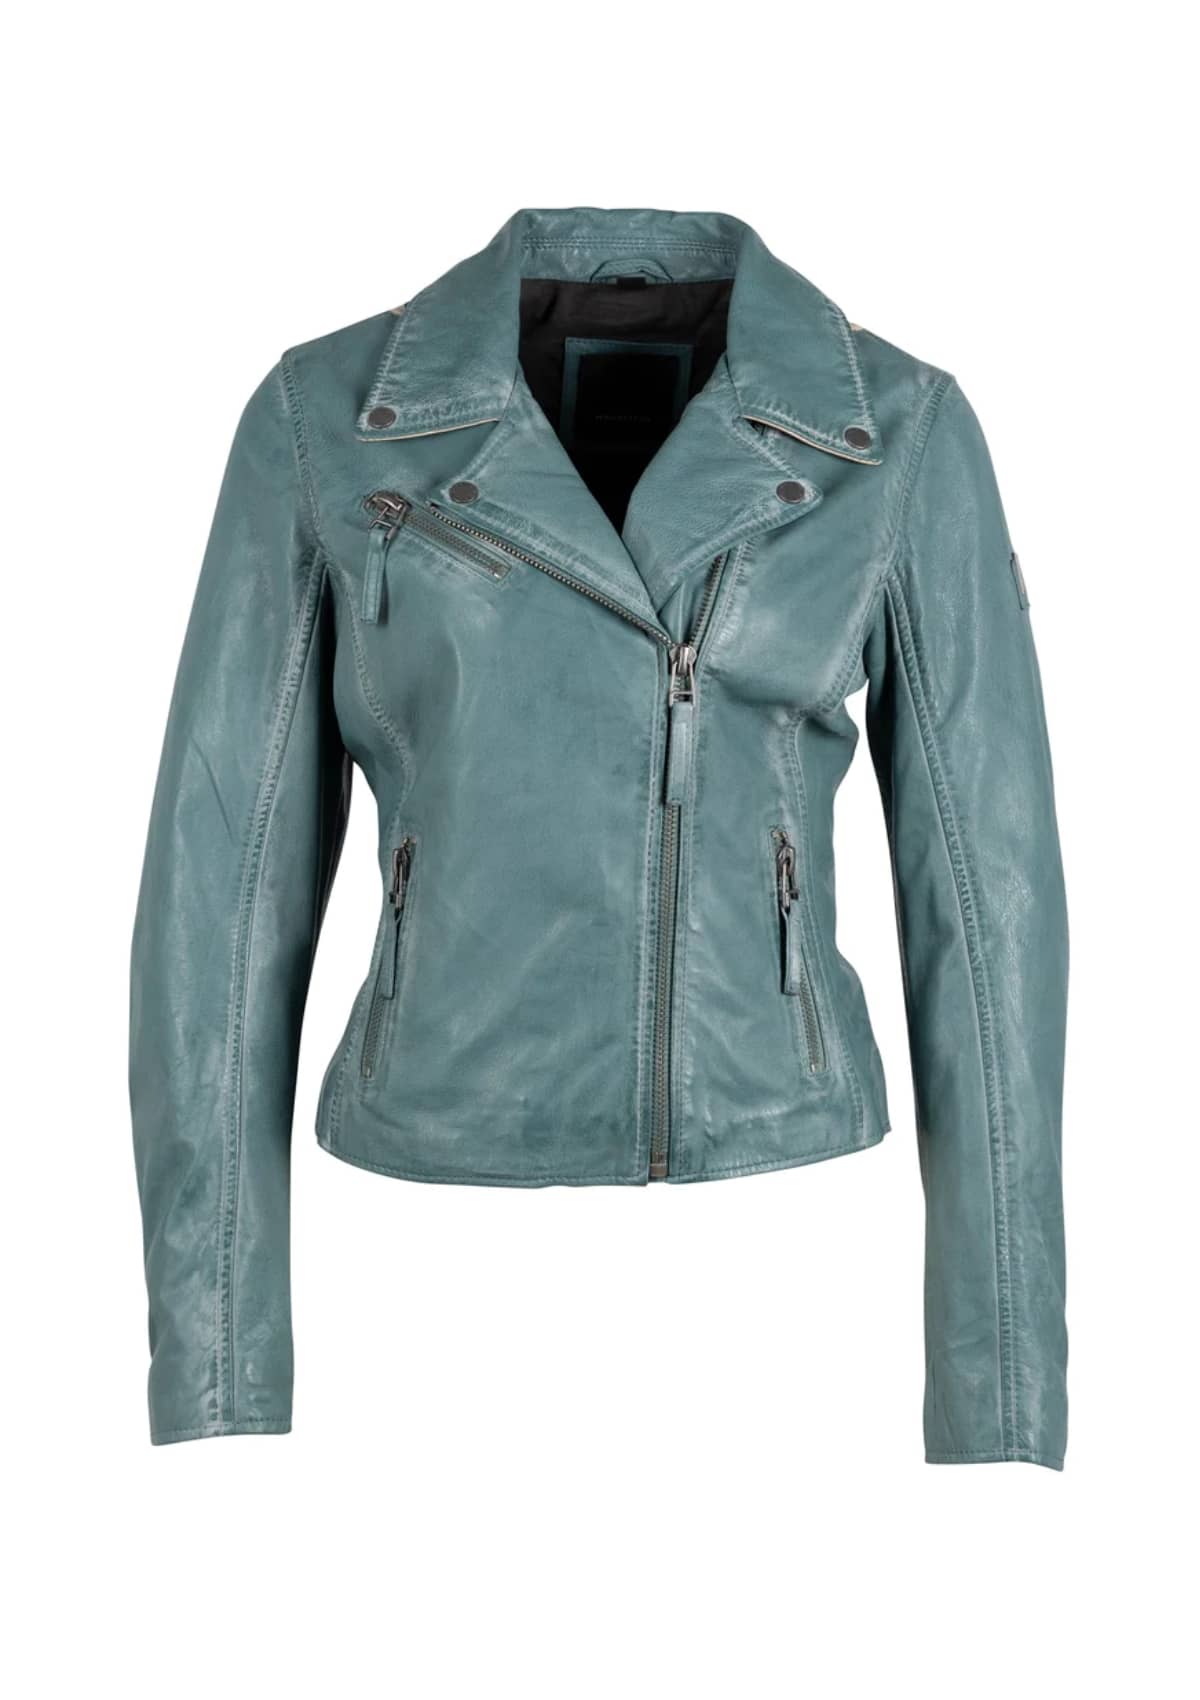 Christy RF Leather Jacket - Seagreen -Mauritius GmbH Int. Fashion- Ruby Jane-